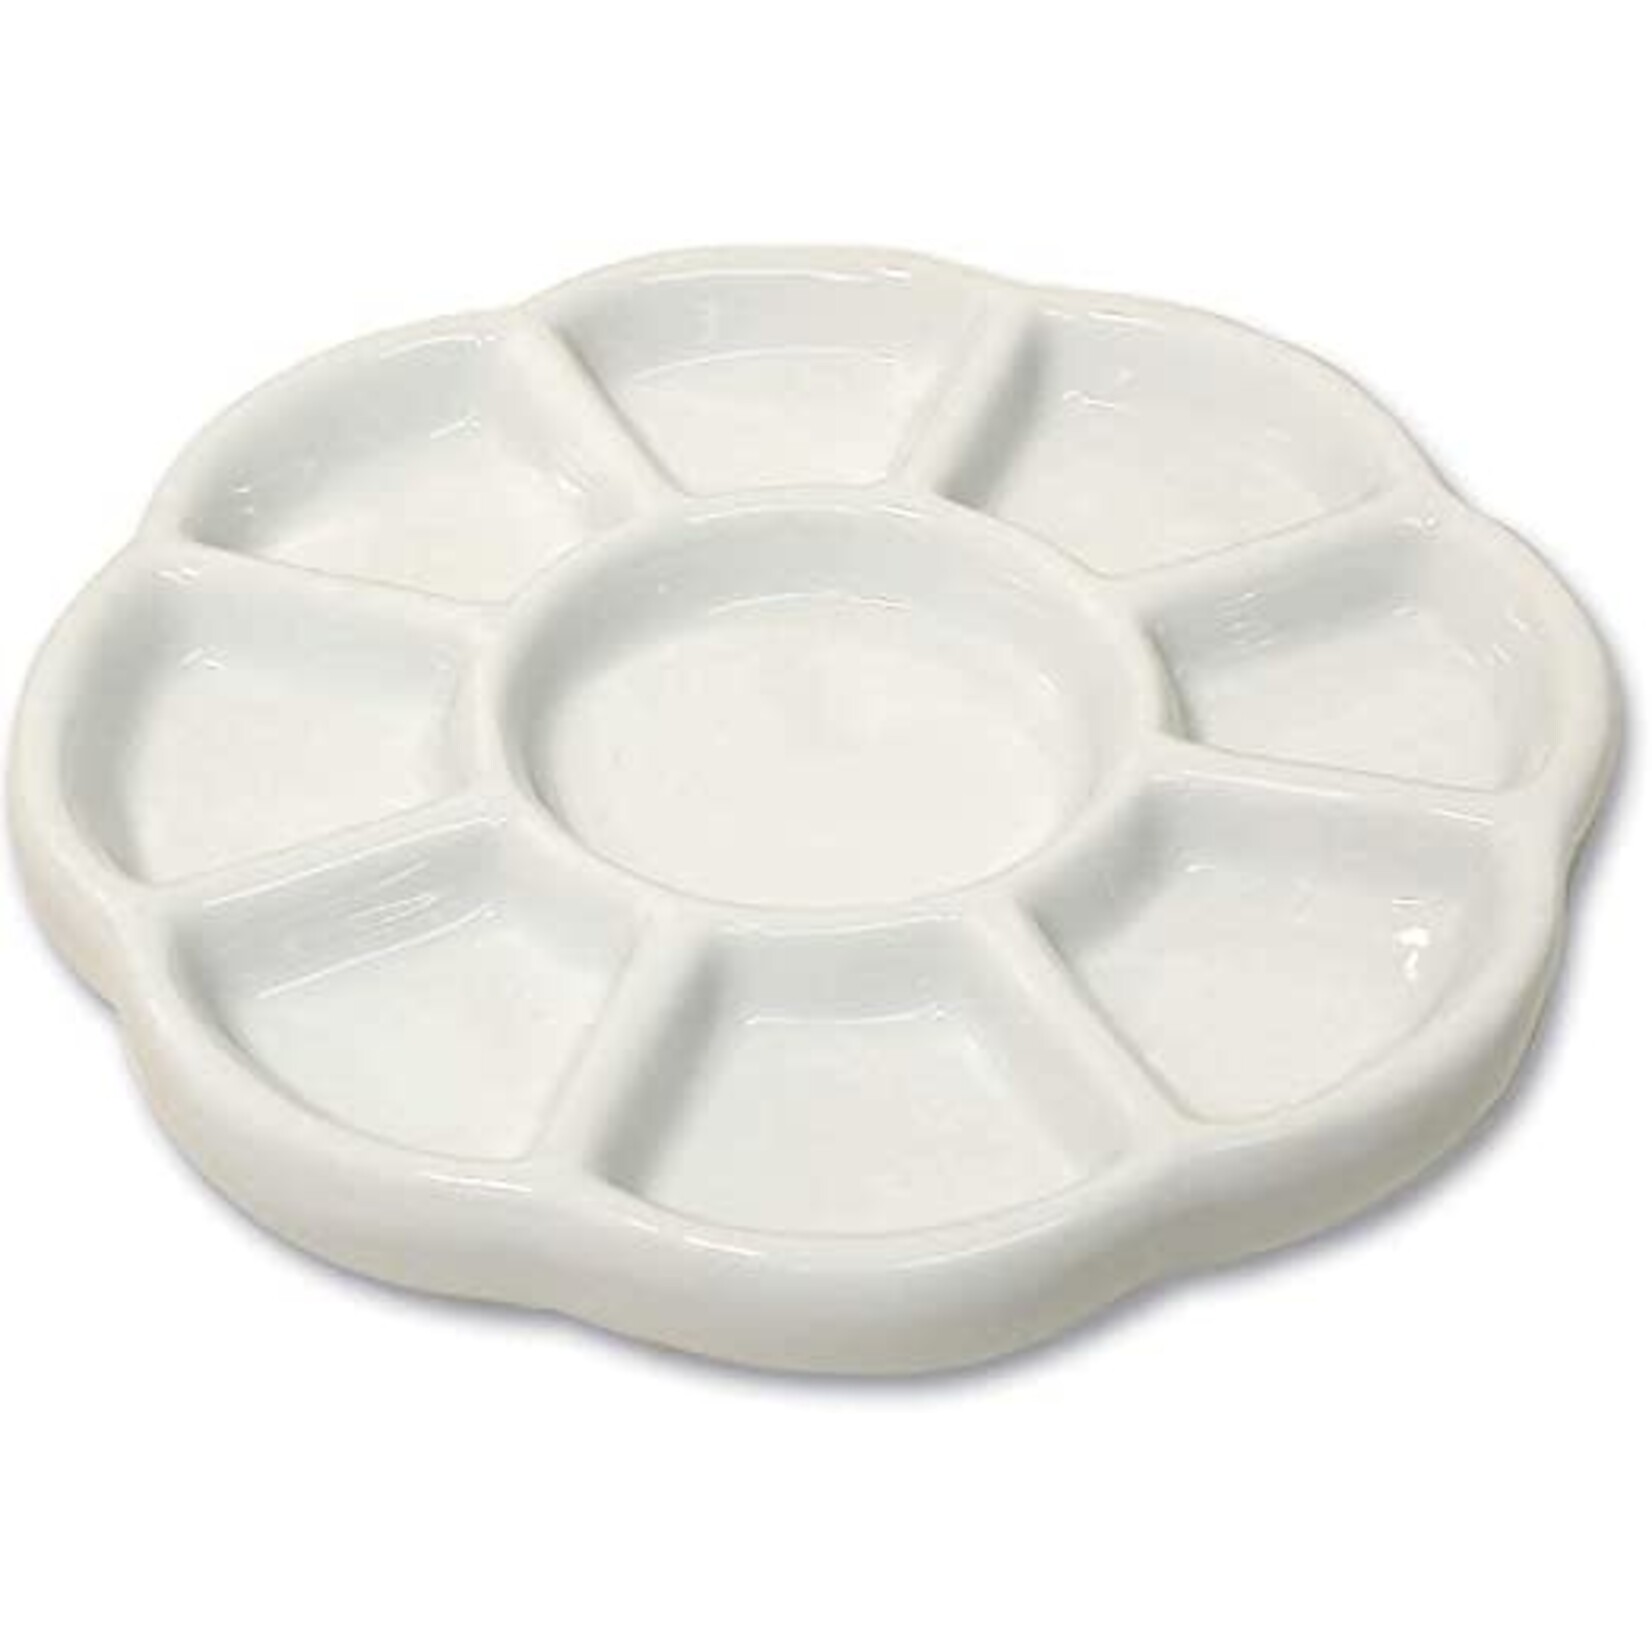 Yasutomo Porcelain Tray Round 8 Section